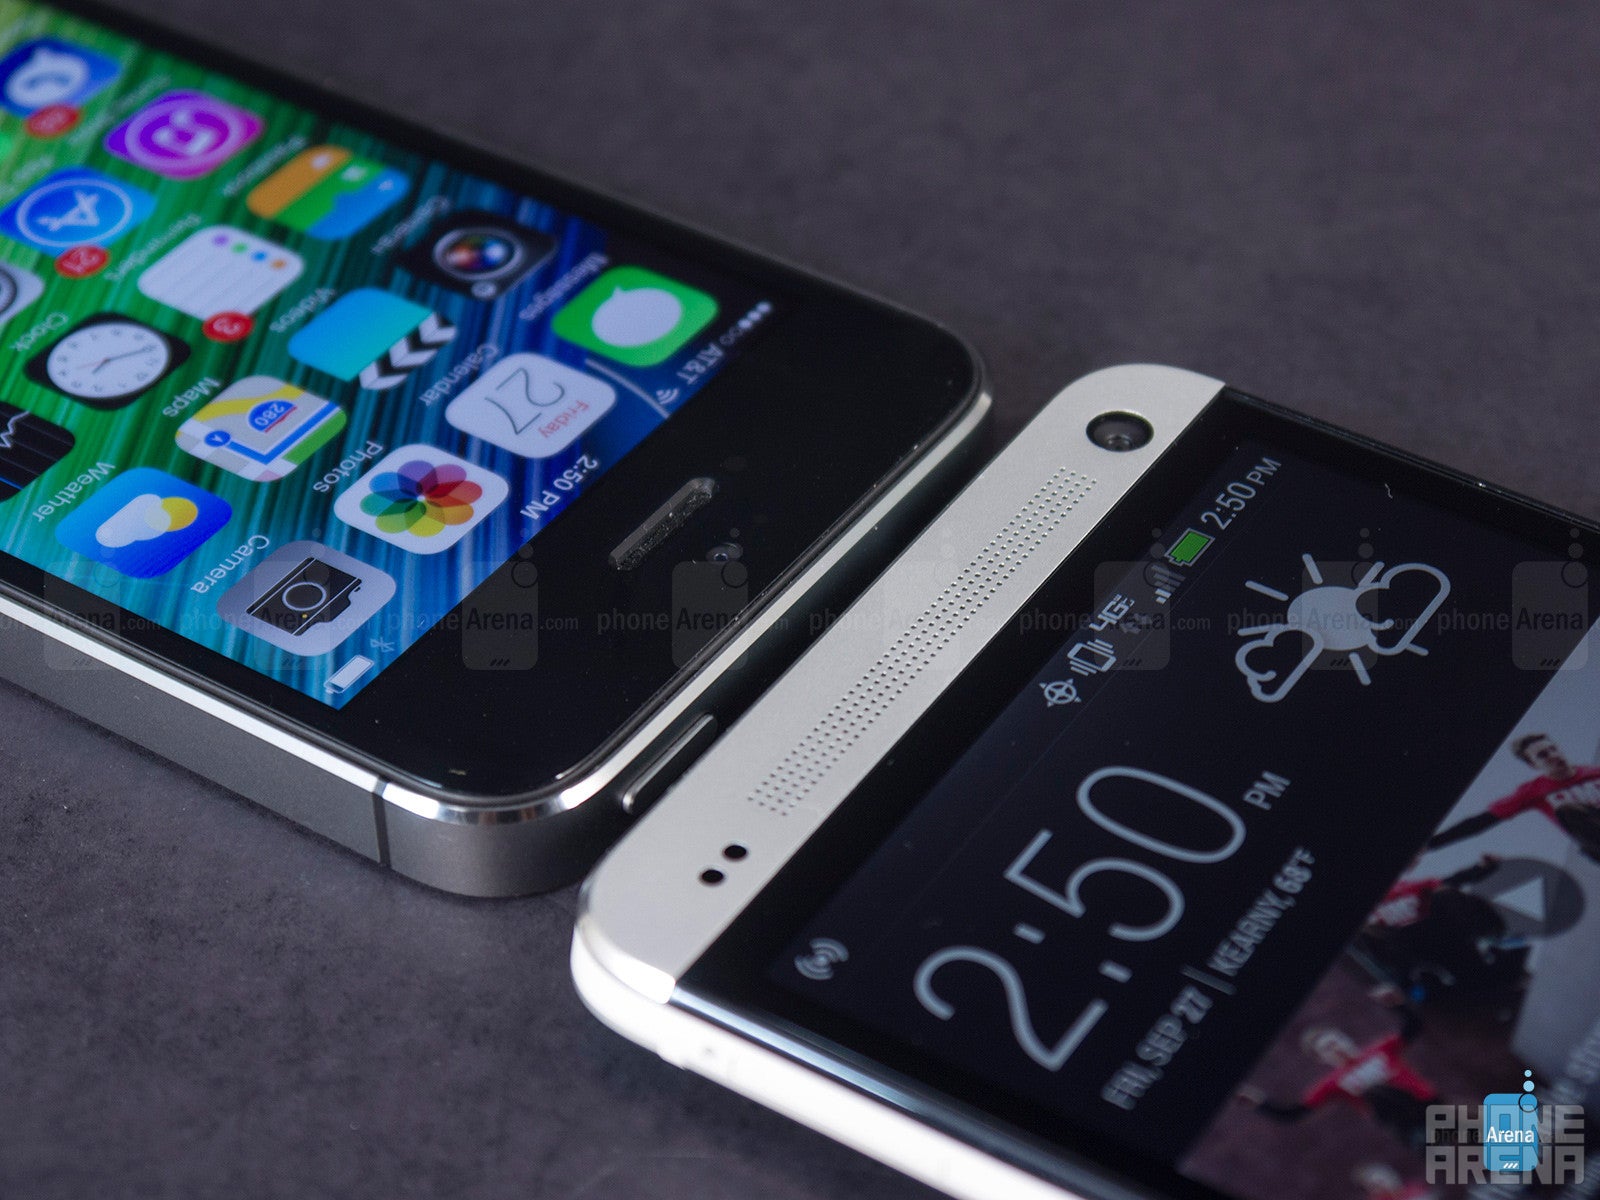 Apple iPhone 5s vs HTC One